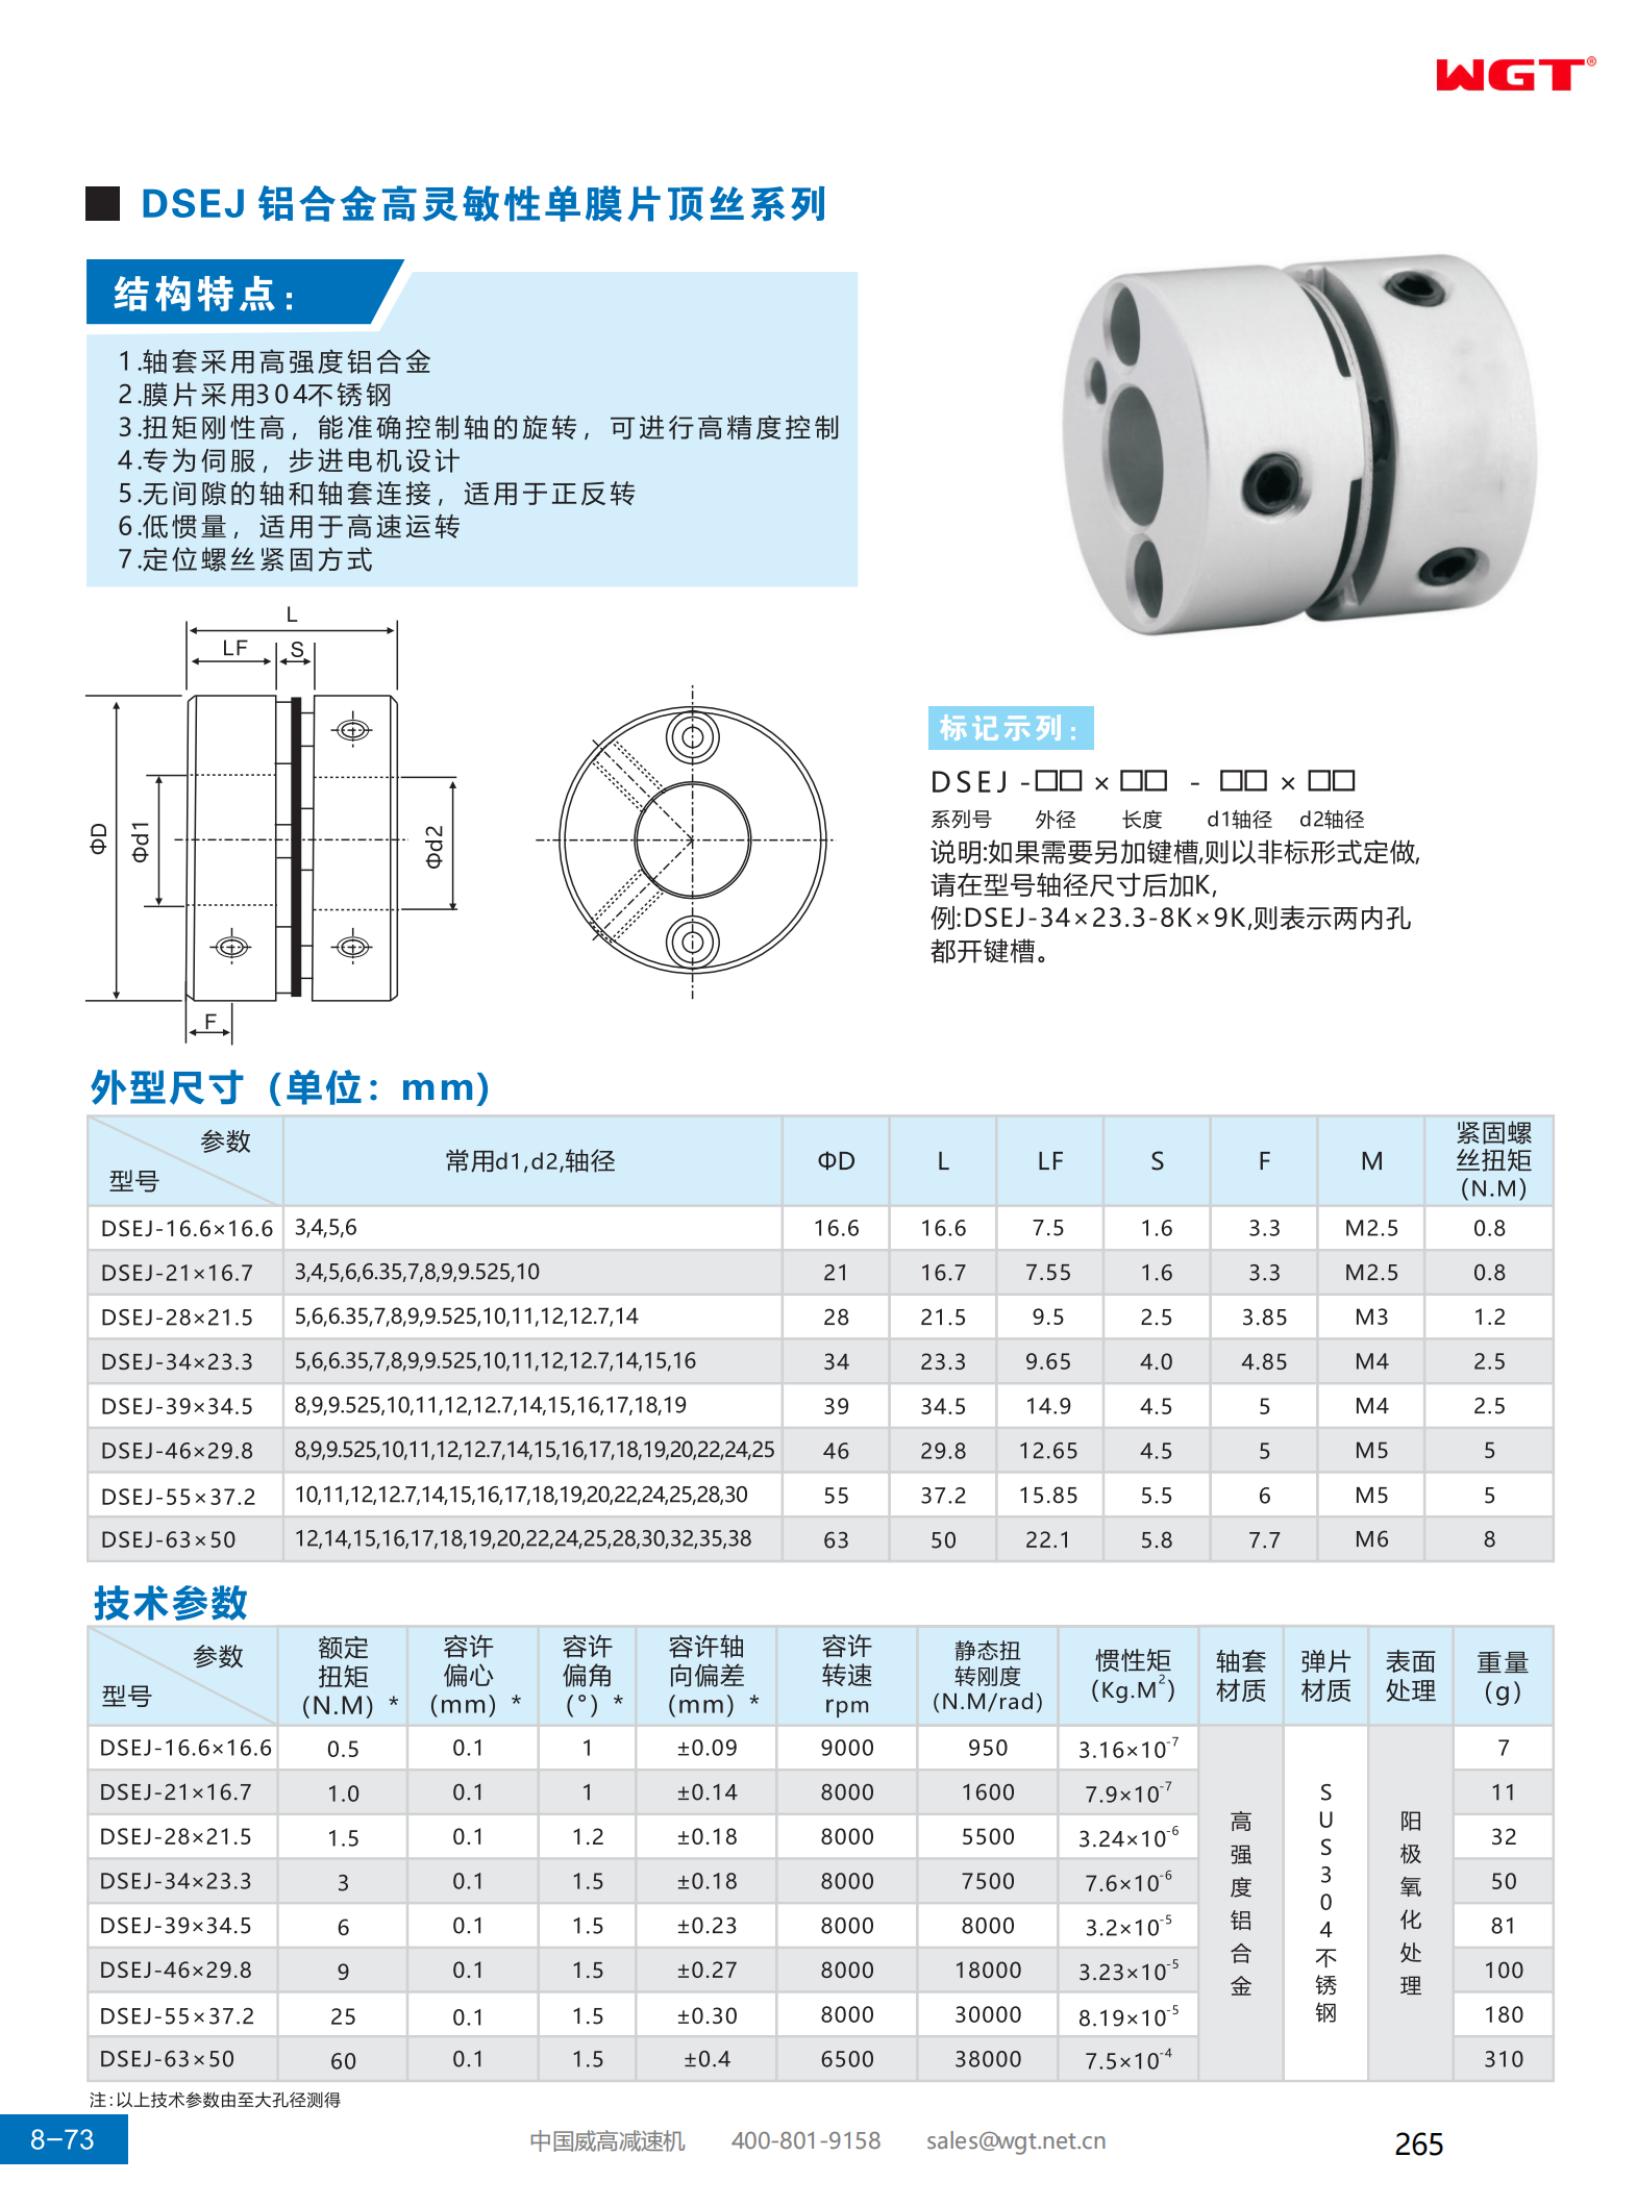 DSEJ aluminum alloy high sensitivity single diaphragm top wire series